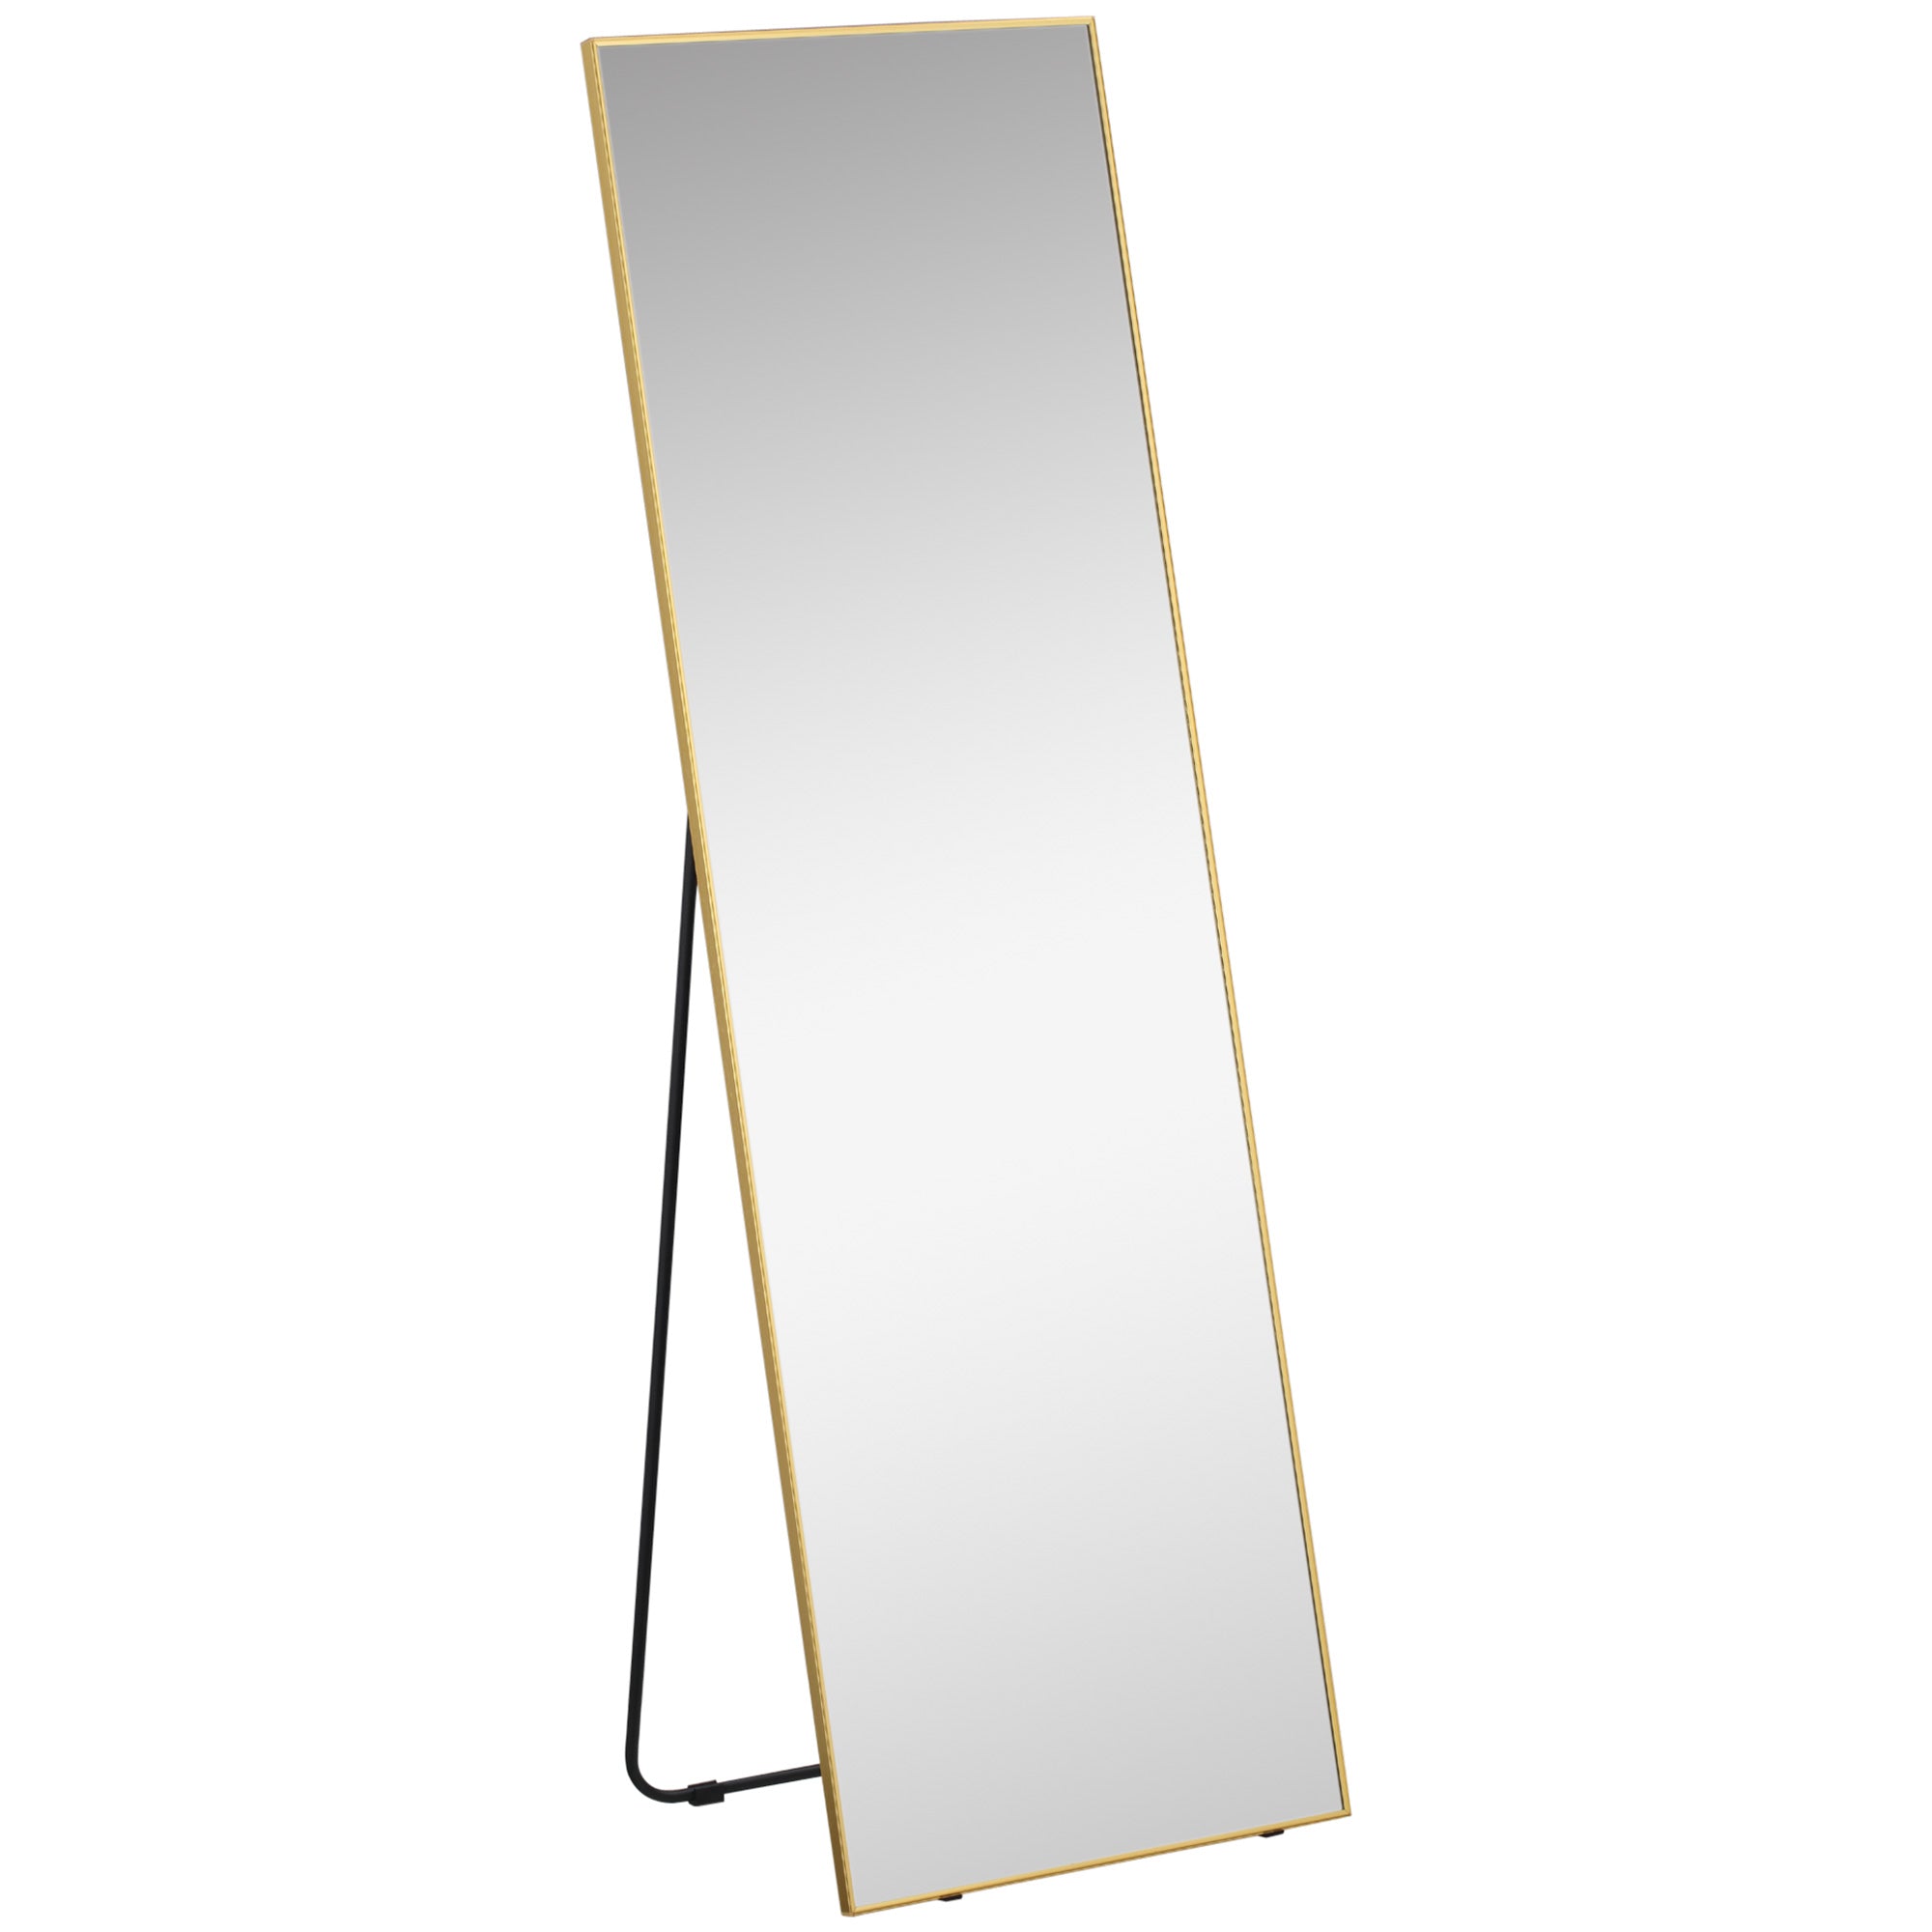 Full Length Mirror Wall-Mounted, 160 x 50 cm Freestanding Rectangle Dressing Mirror for Bedroom, Living Room, Gold Frame-0